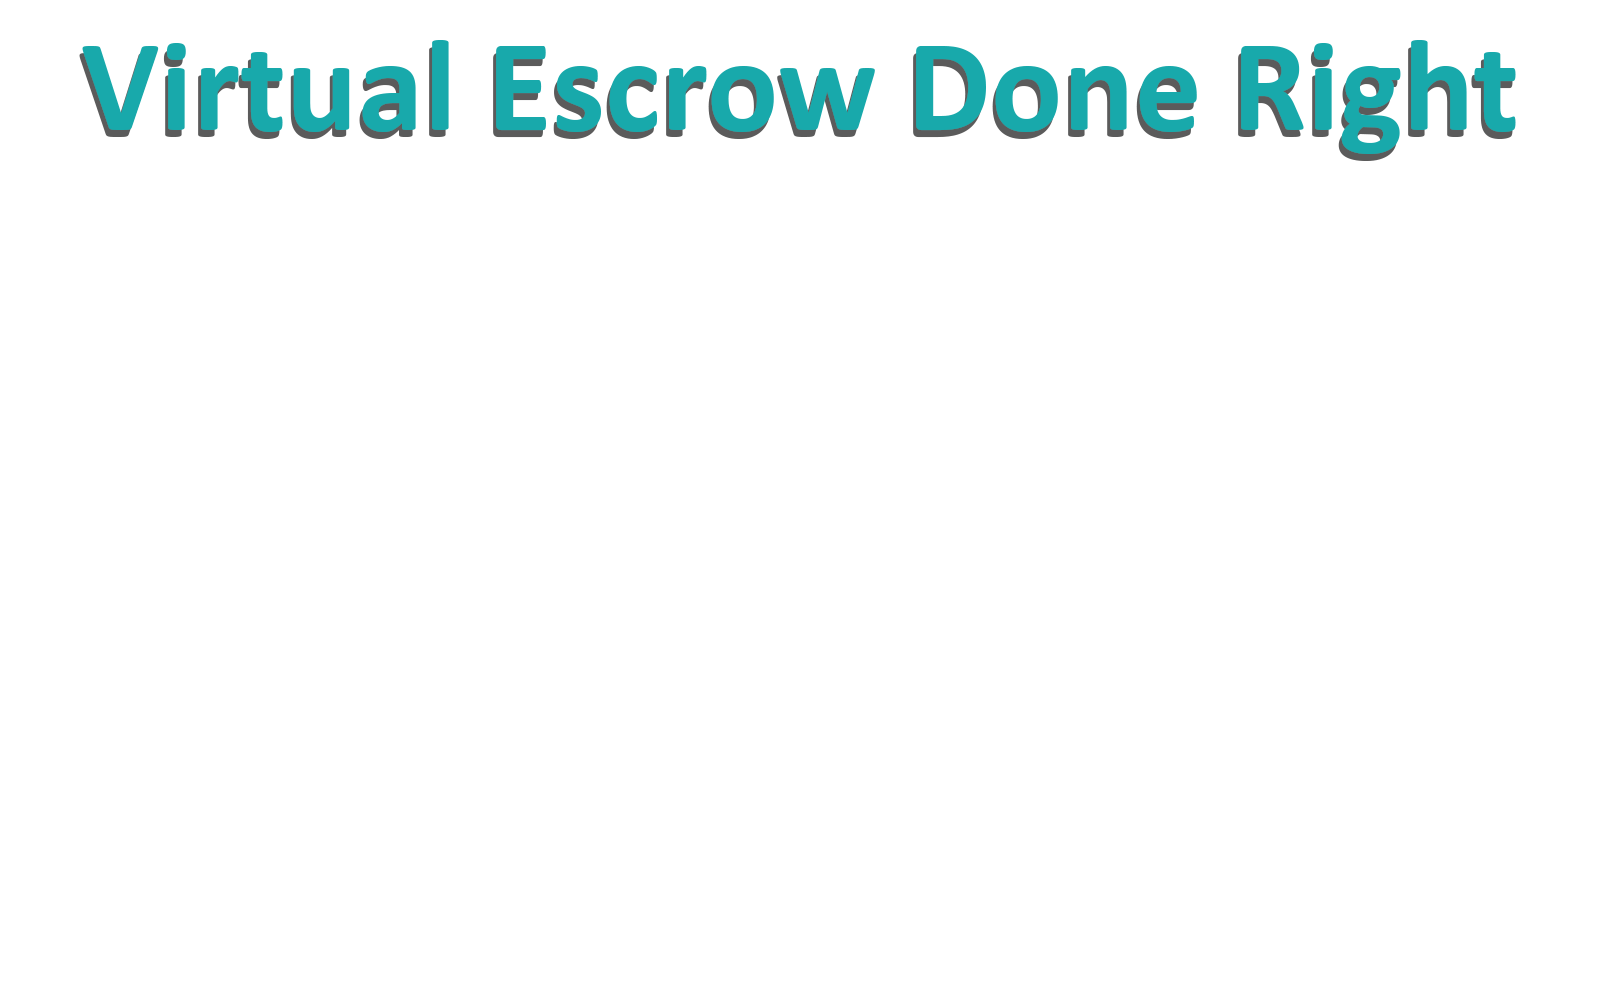 Open Escrow is San Diego's Best Virtual Escrow Company